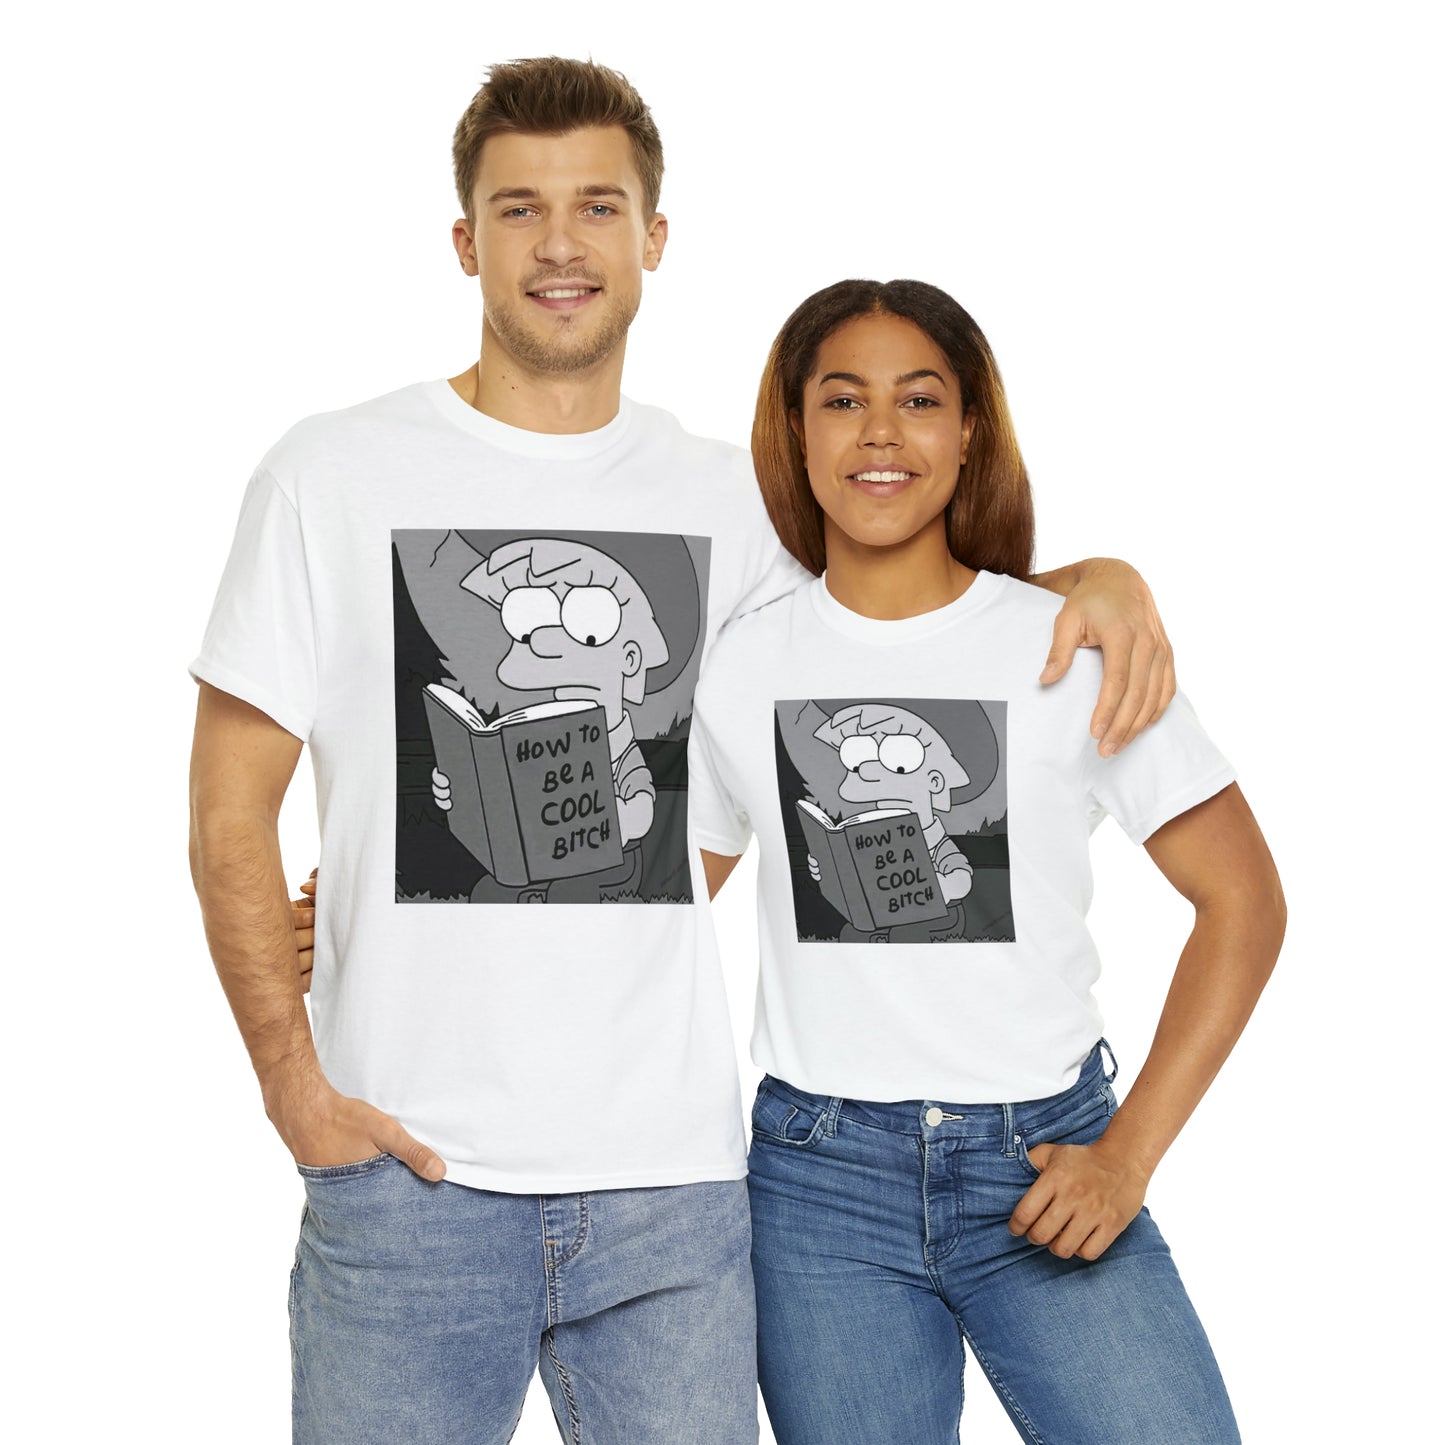 Lisa Simpson T-Shirt